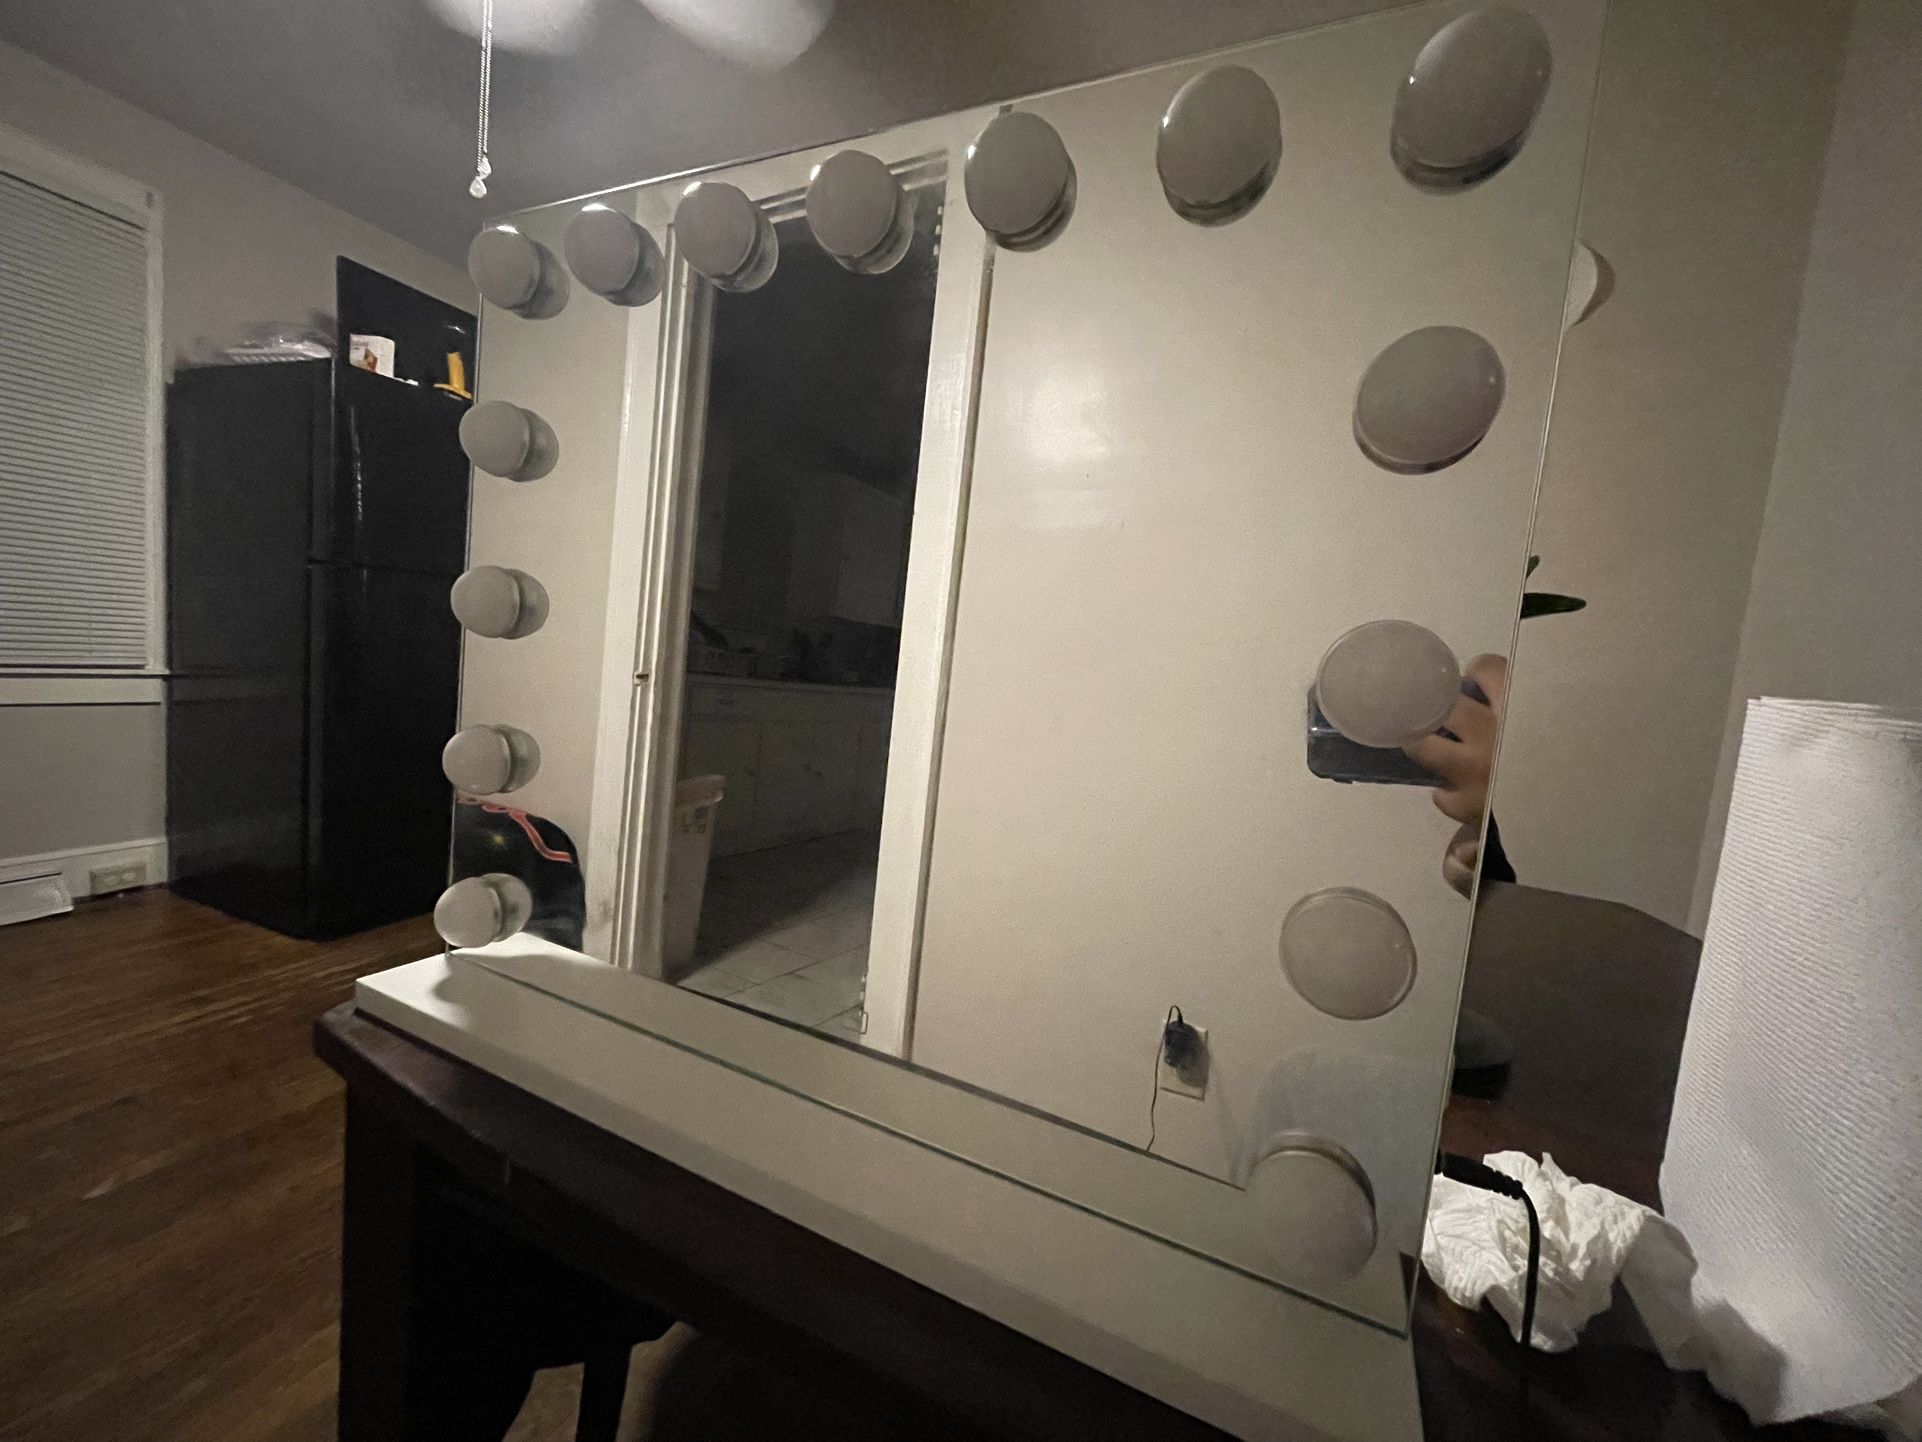  Vanity Mirror with Lights and Speaker